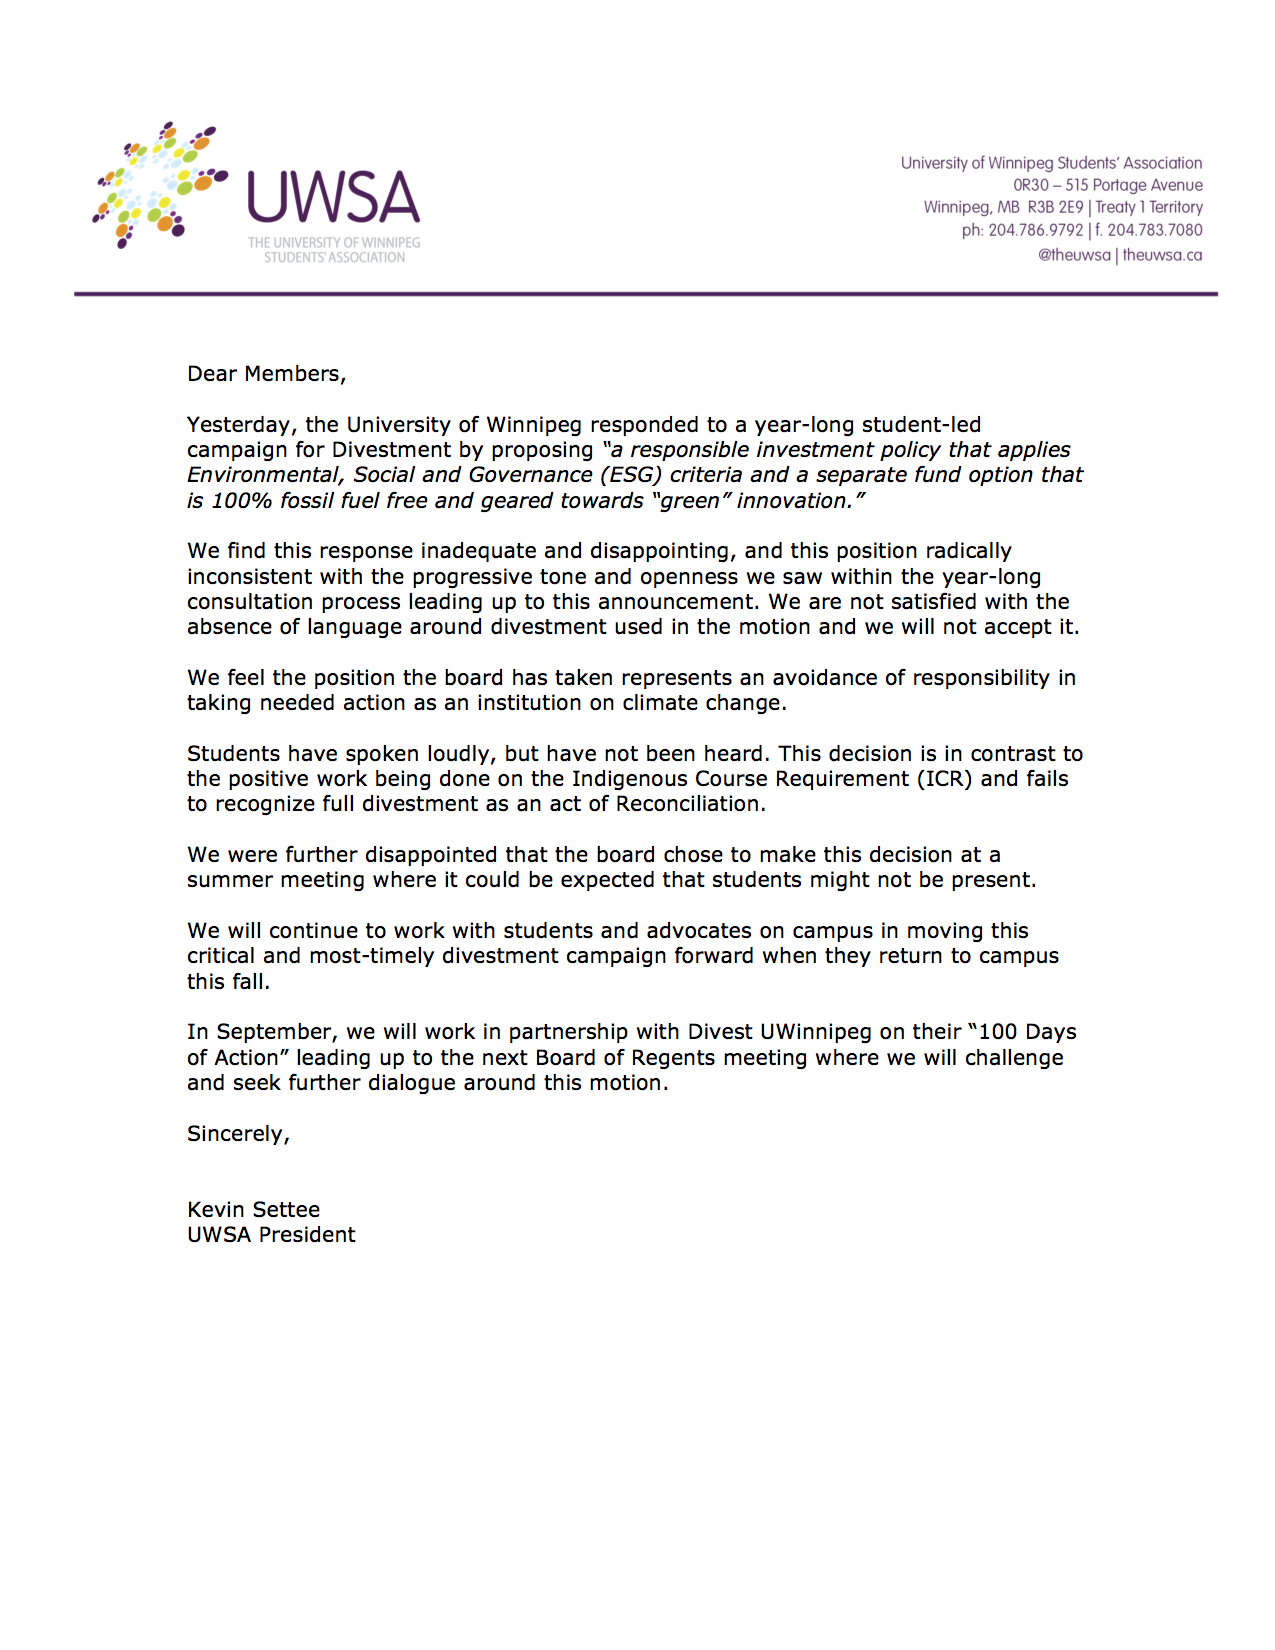 UWSA Member Statement